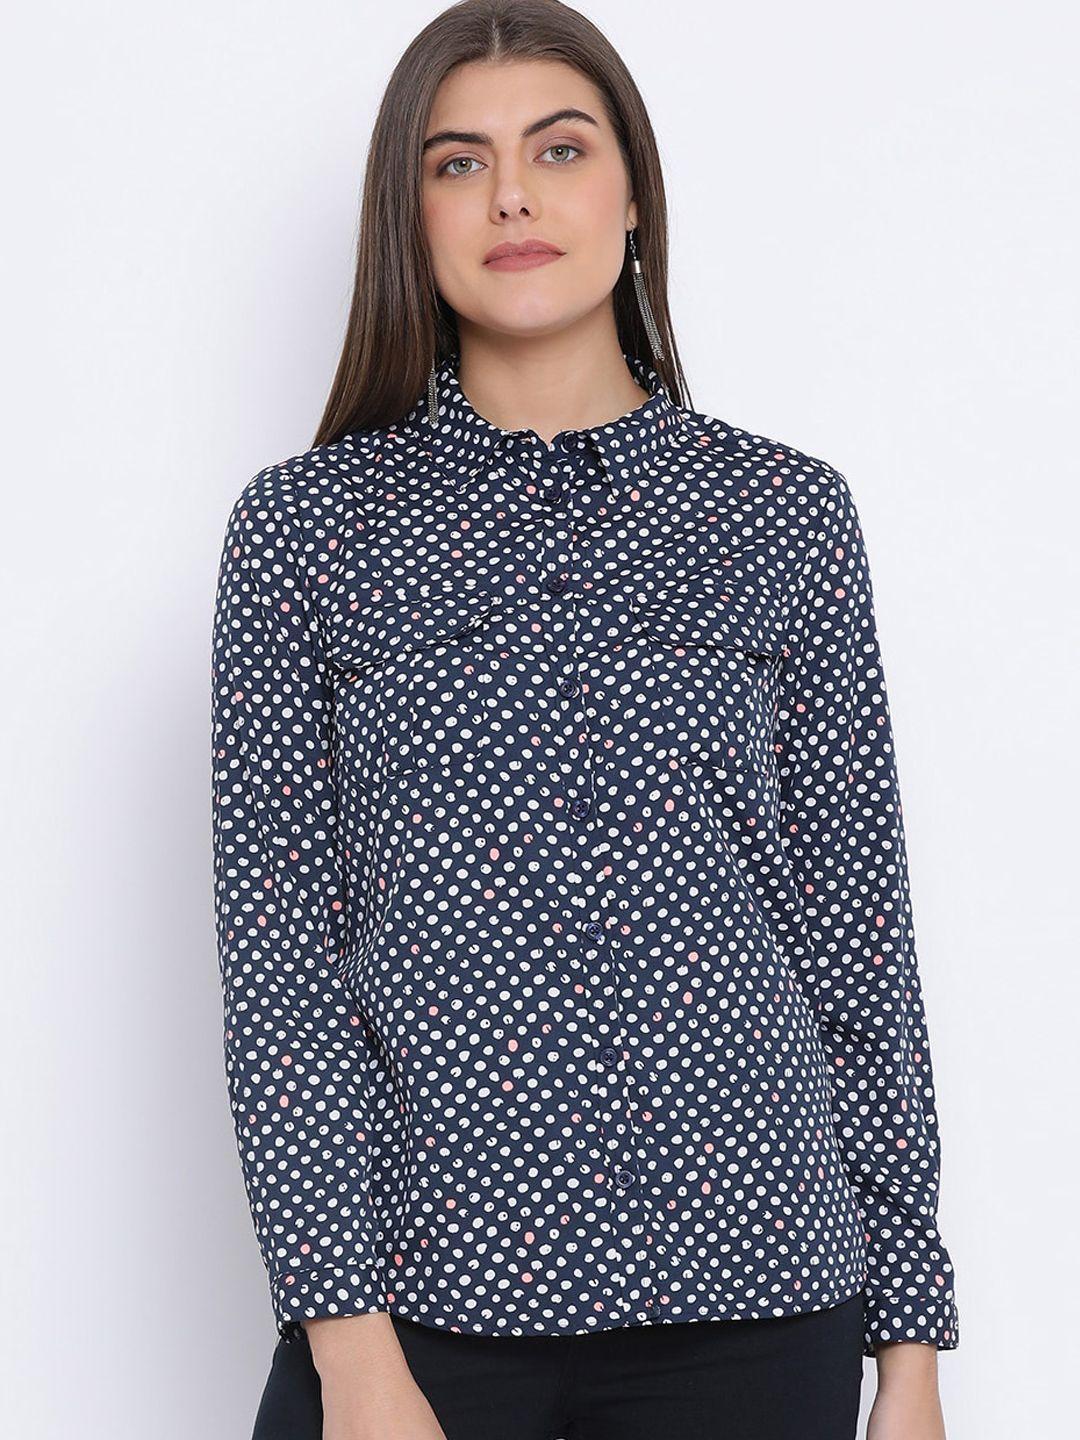 oxolloxo women navy blue regular fit printed casual shirt